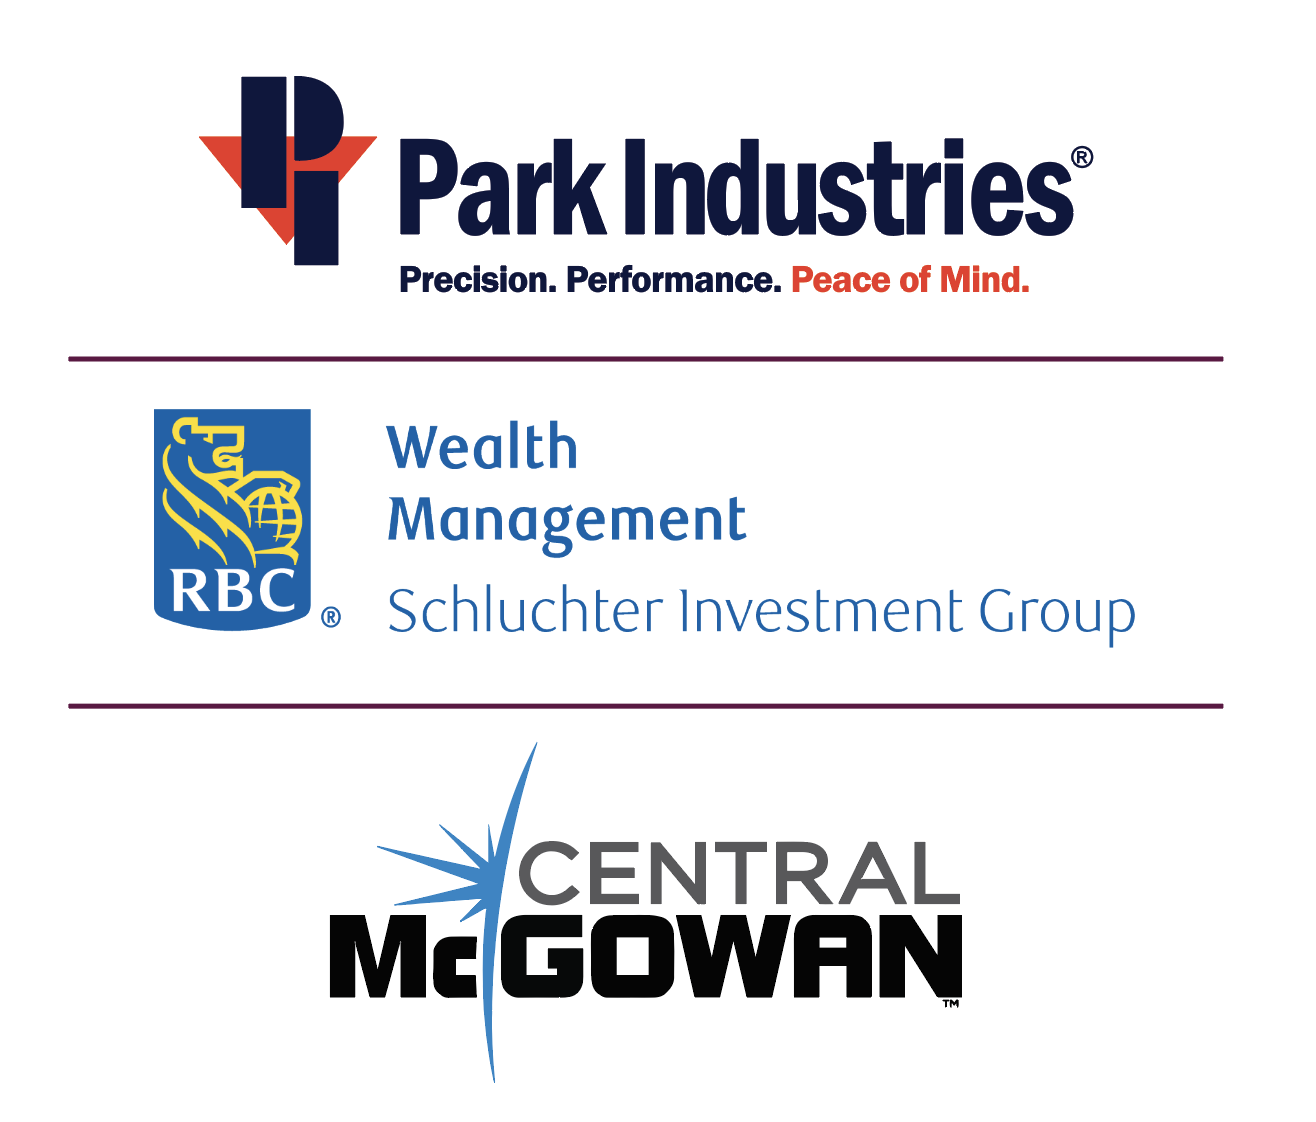 Park Industries, RBC, and Central McGowan logos